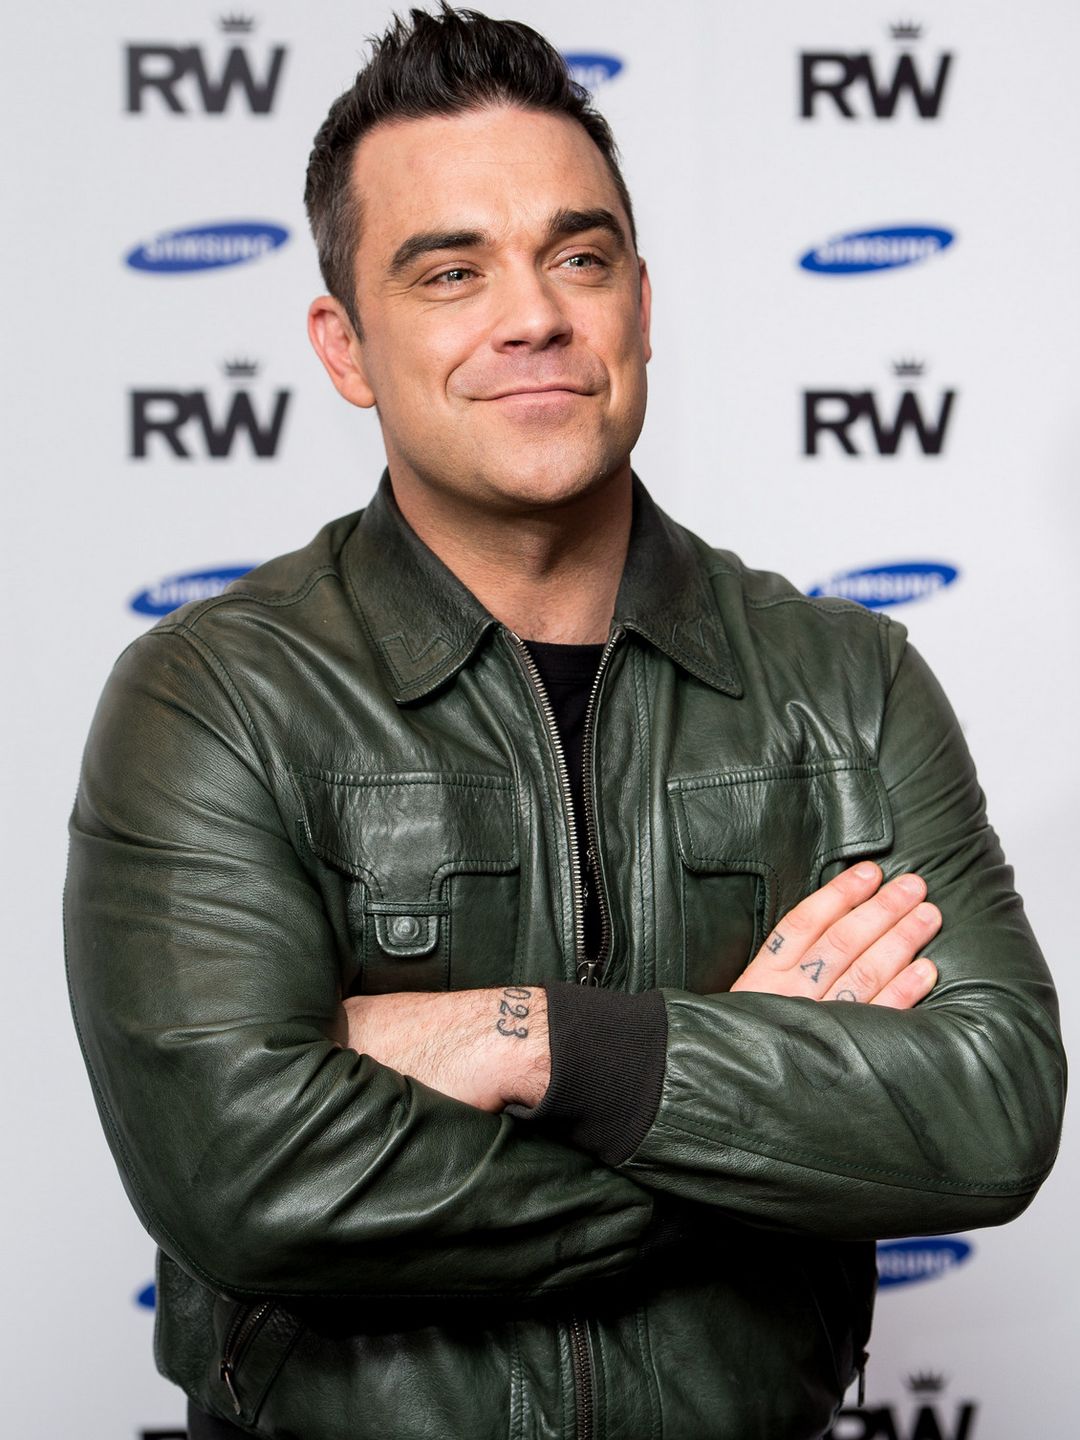 Robbie Williams background